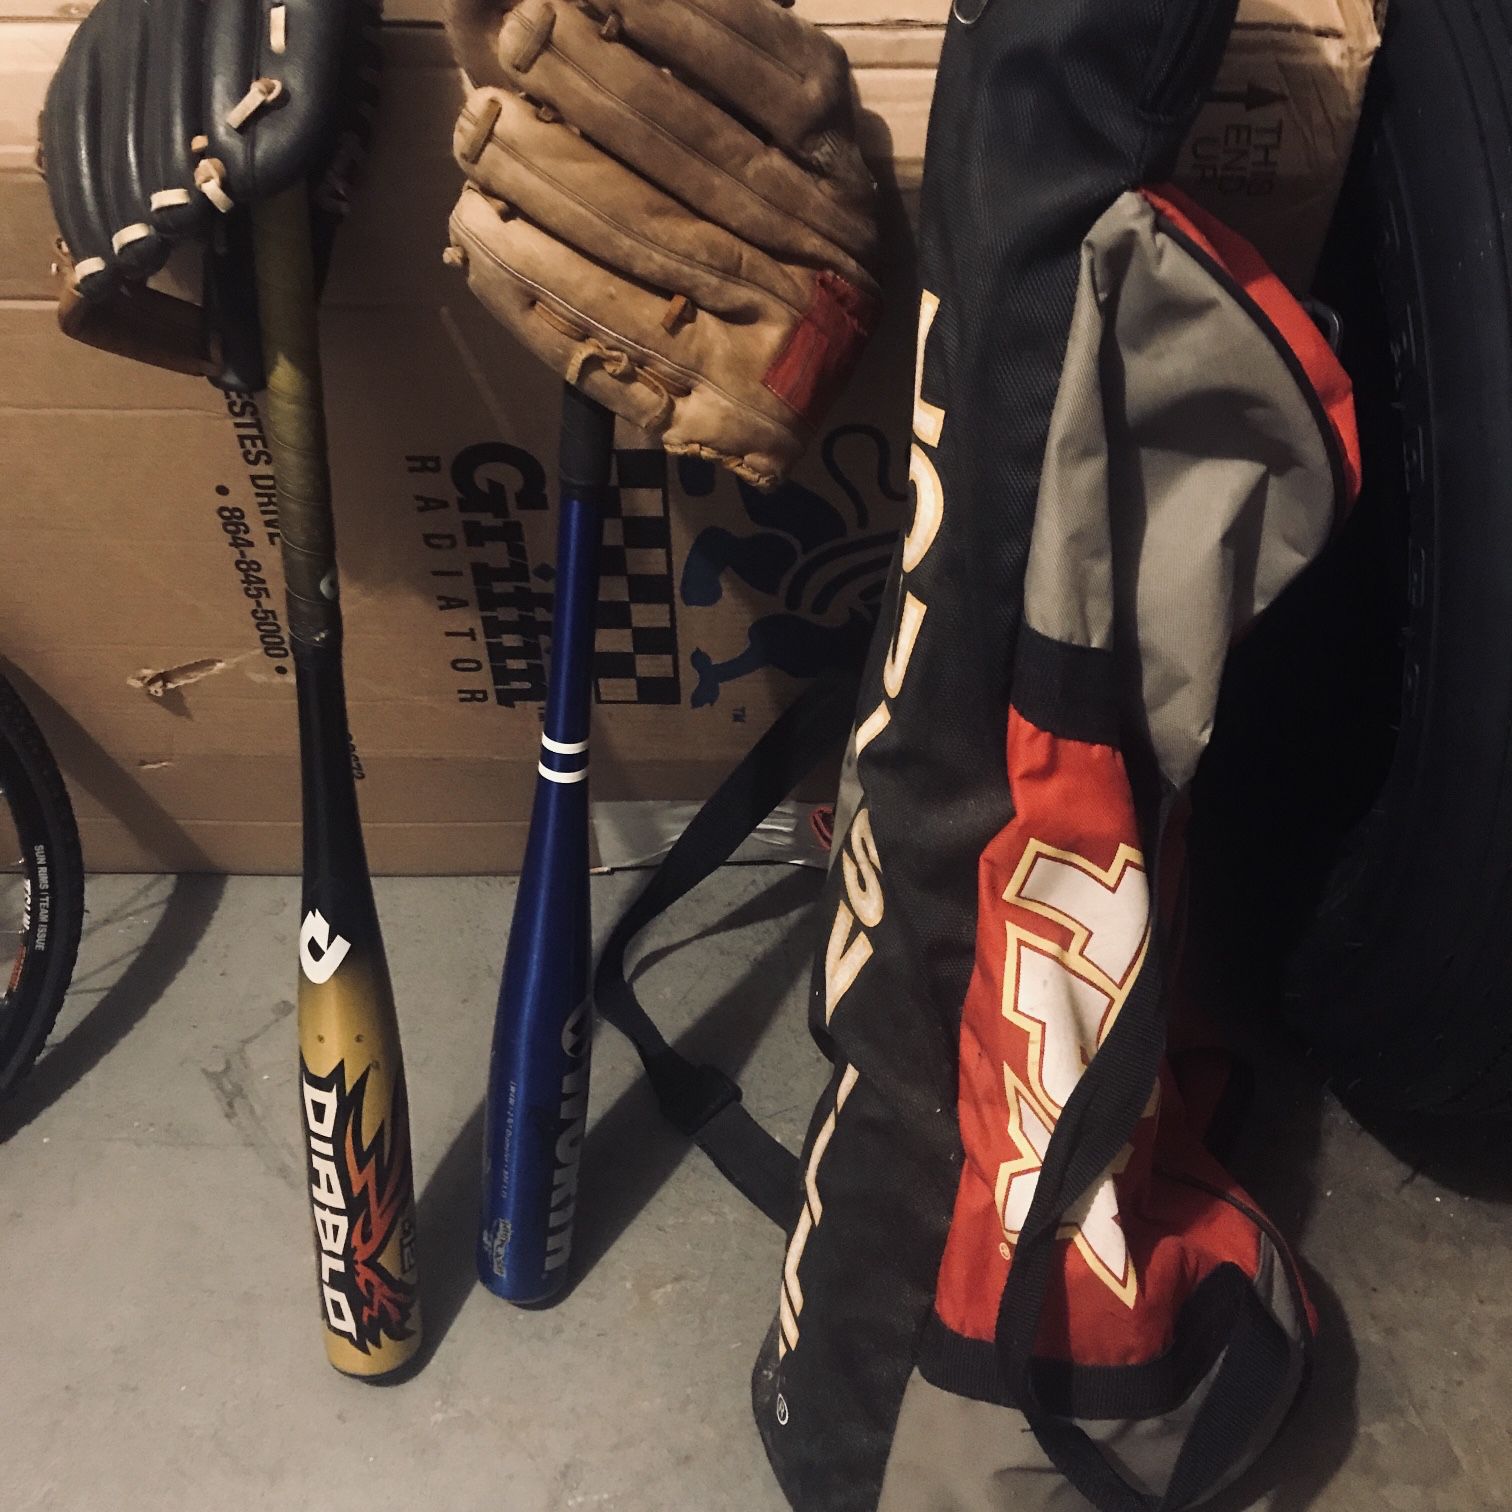 2 Baseball Bats, 2 Baseball Gloves And A Bag